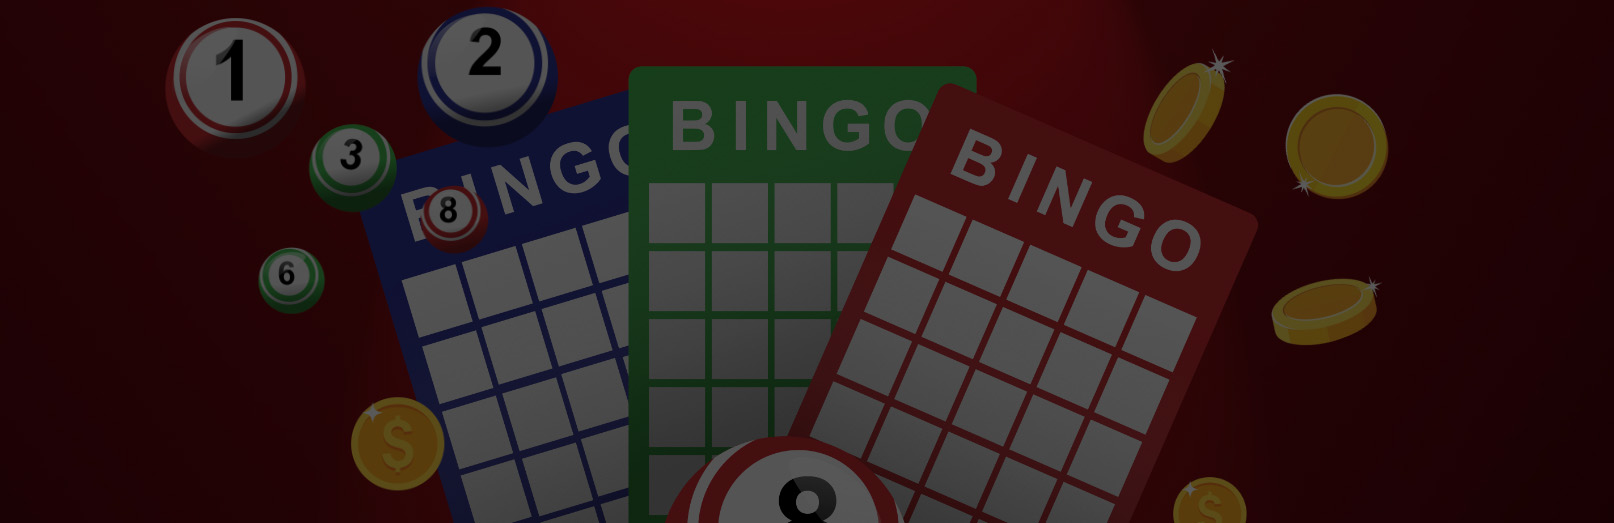 Bingo to Benefit Women Hold the Key